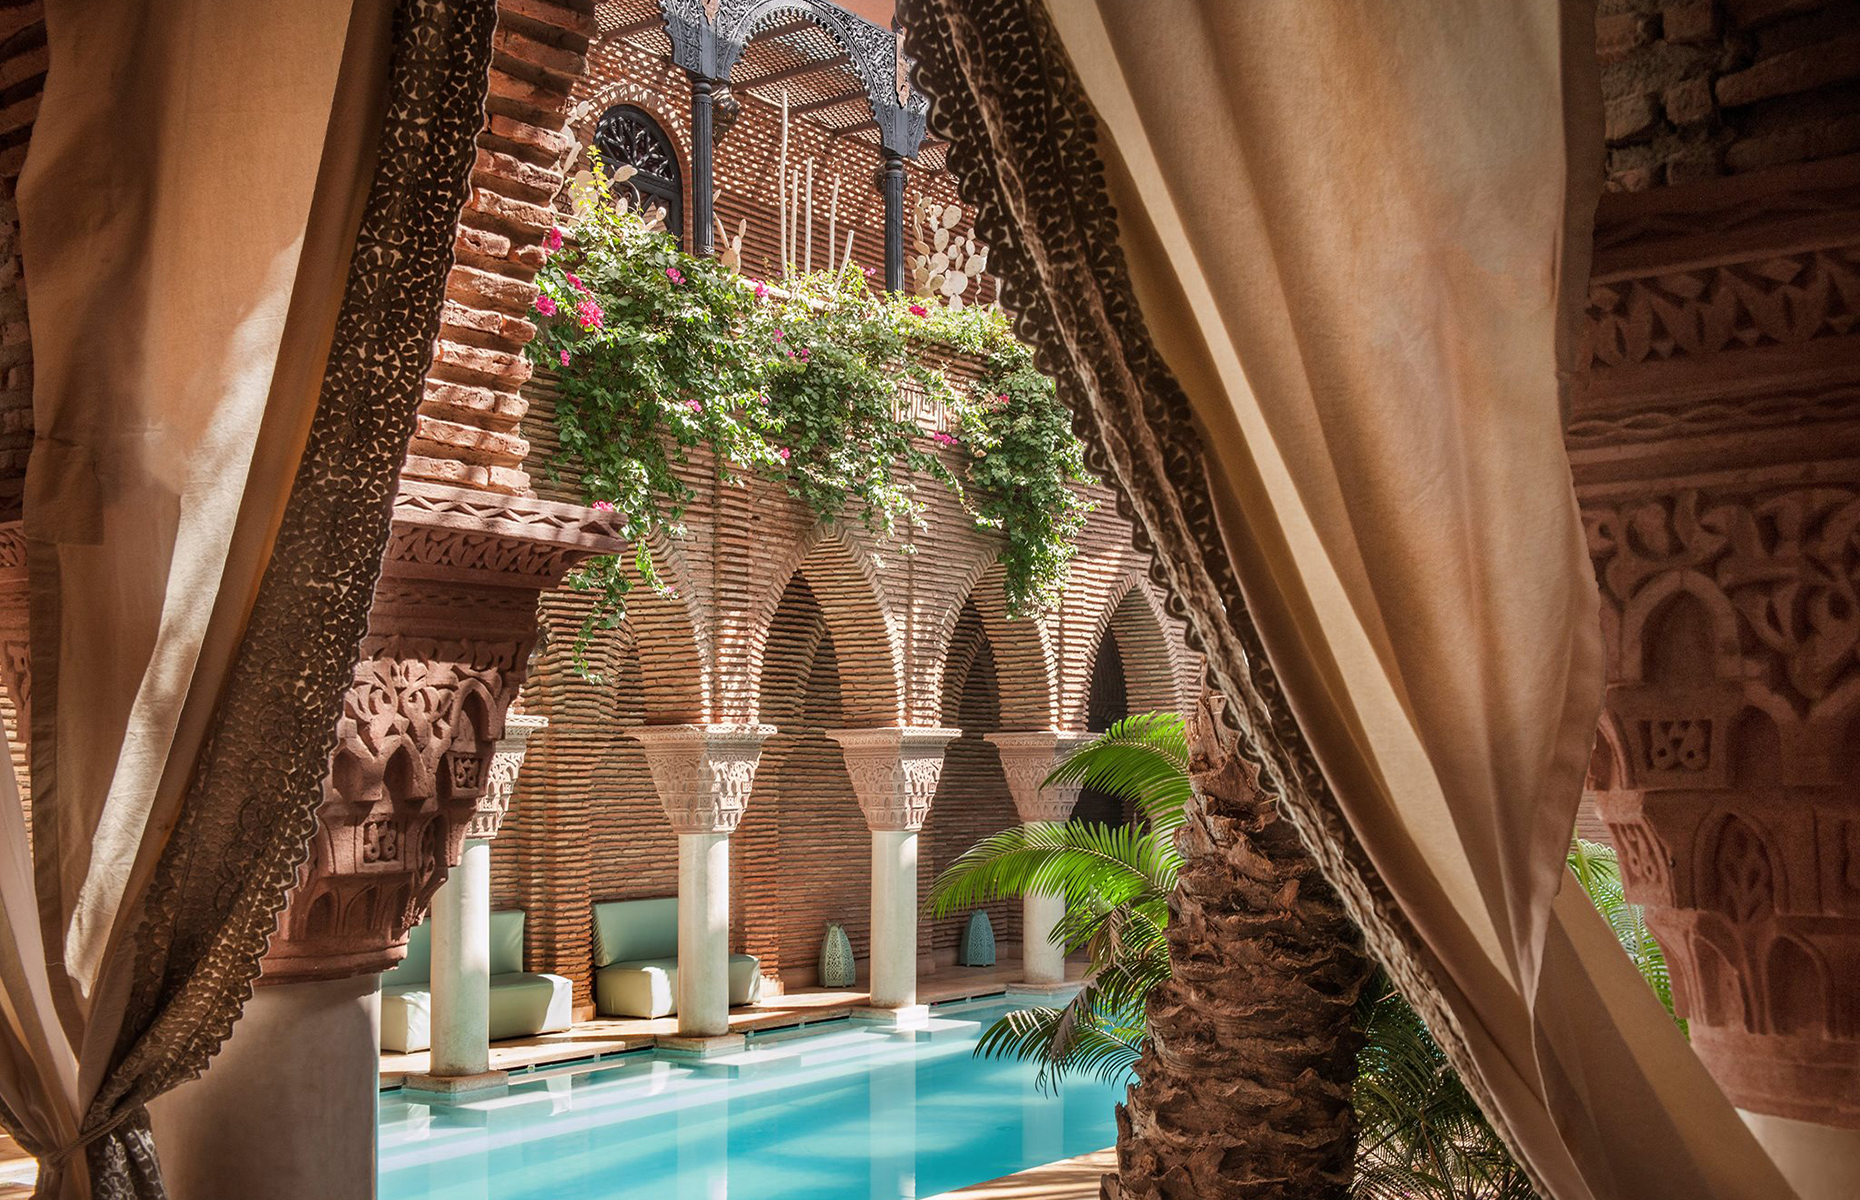 La Sultana hotel in Marrakech (Image: La Sultana Signature Hotels/Facebook)